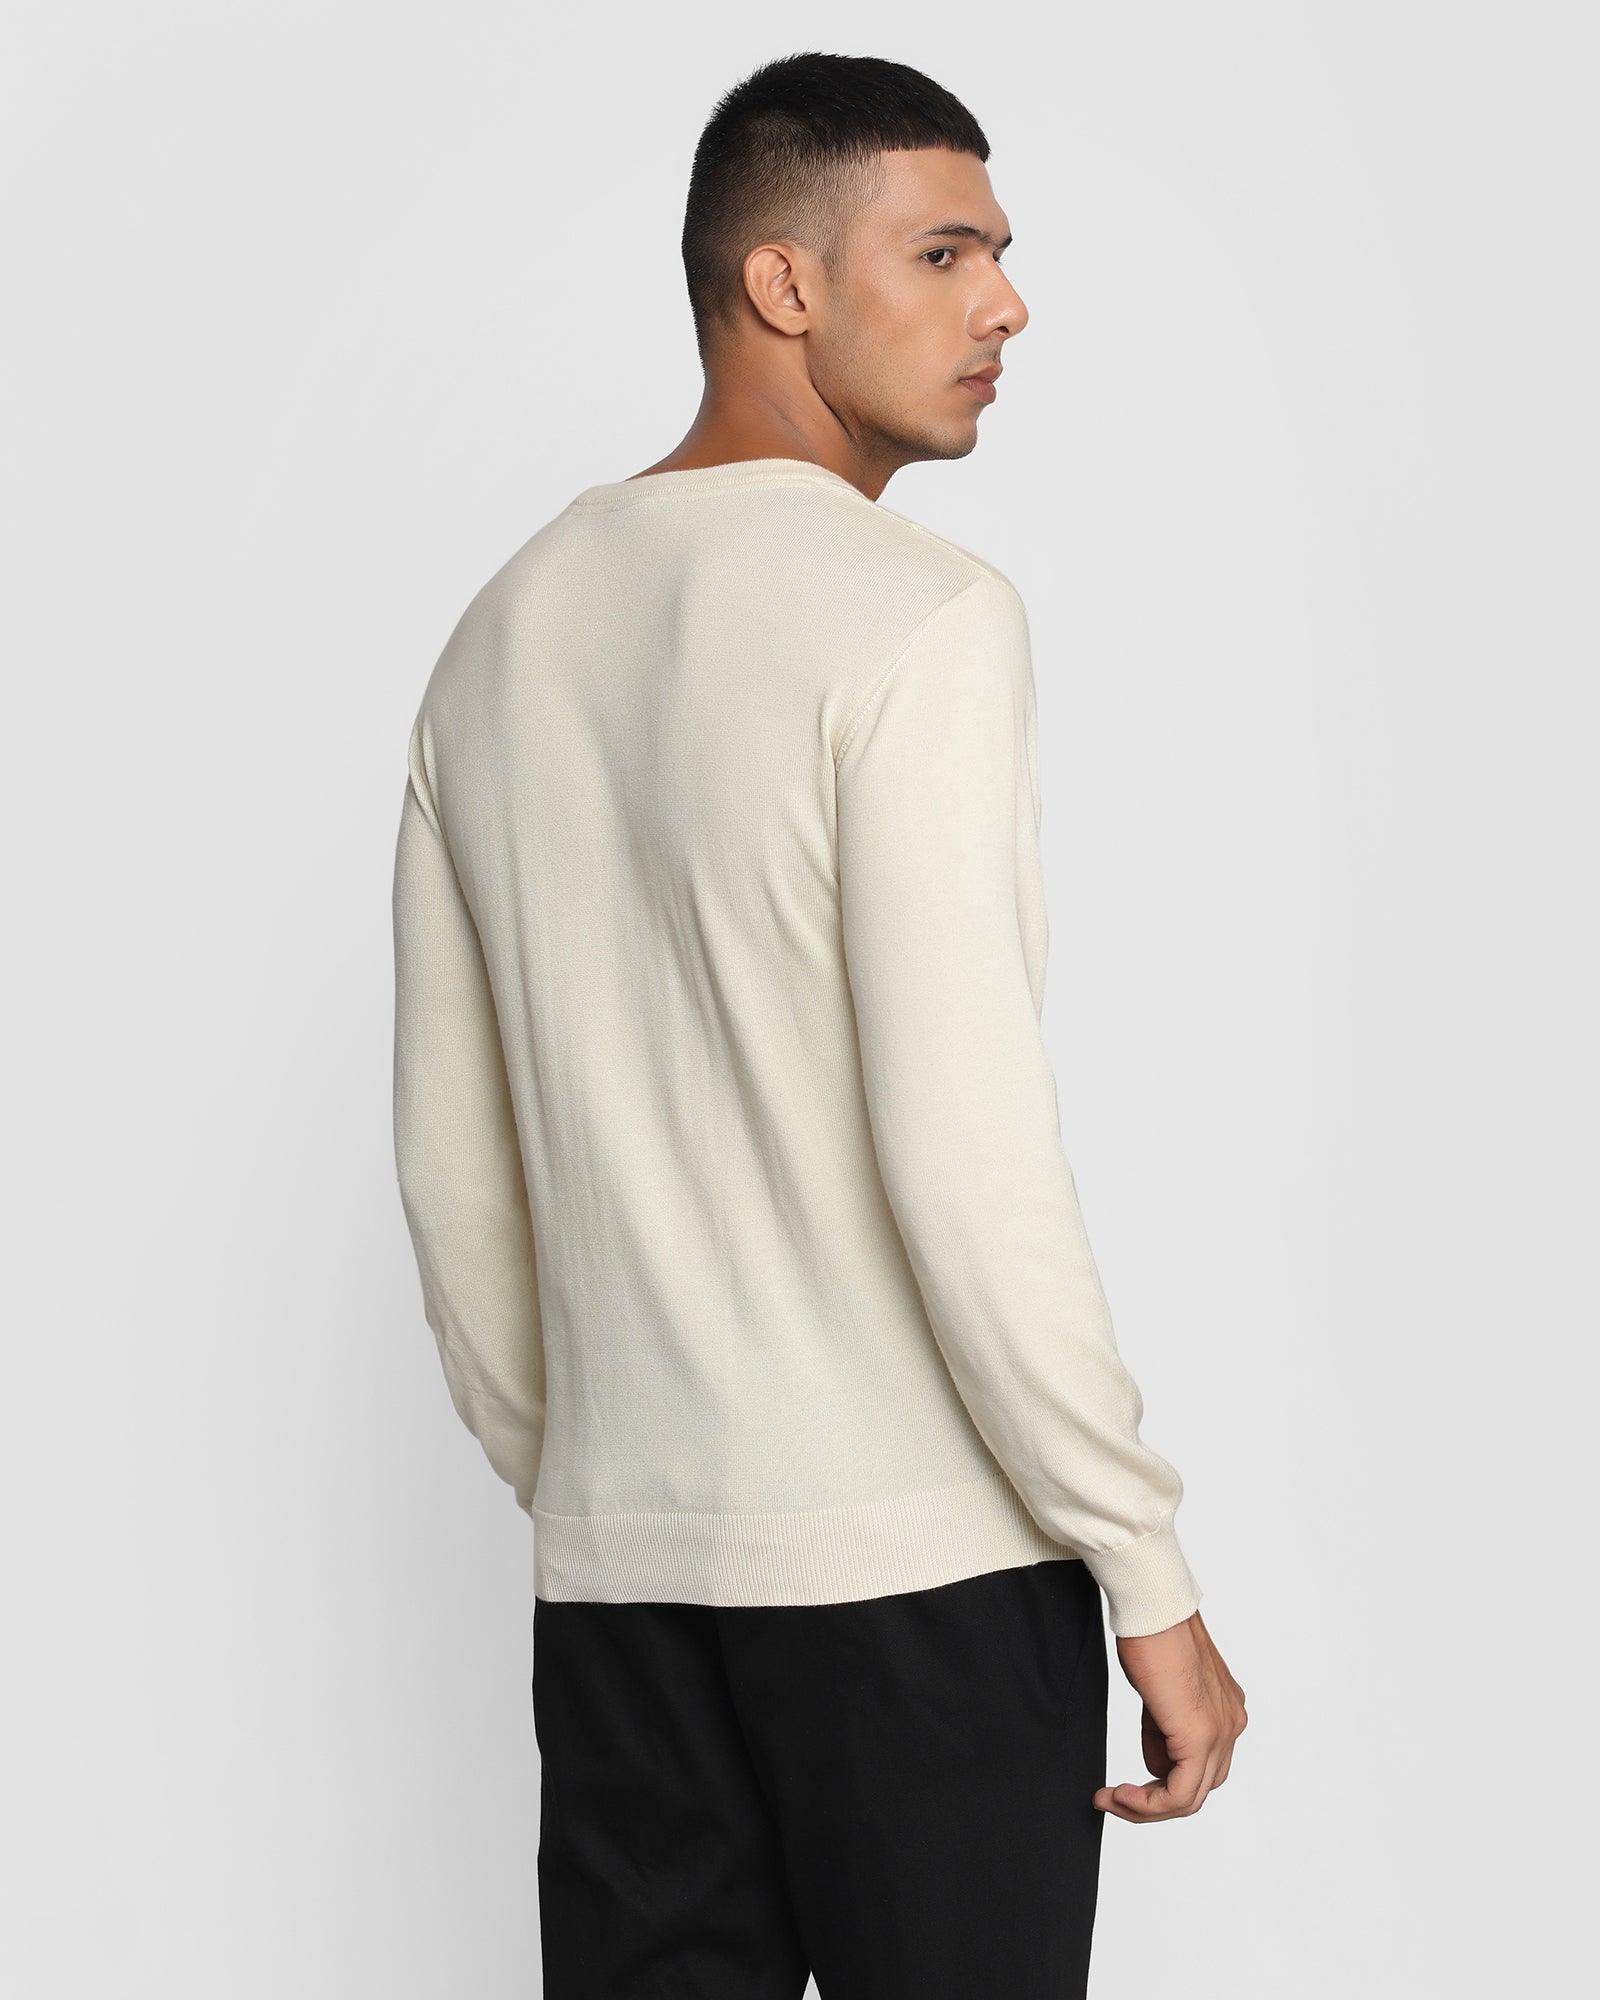 Crew Neck Off White Textured Sweater - Sant